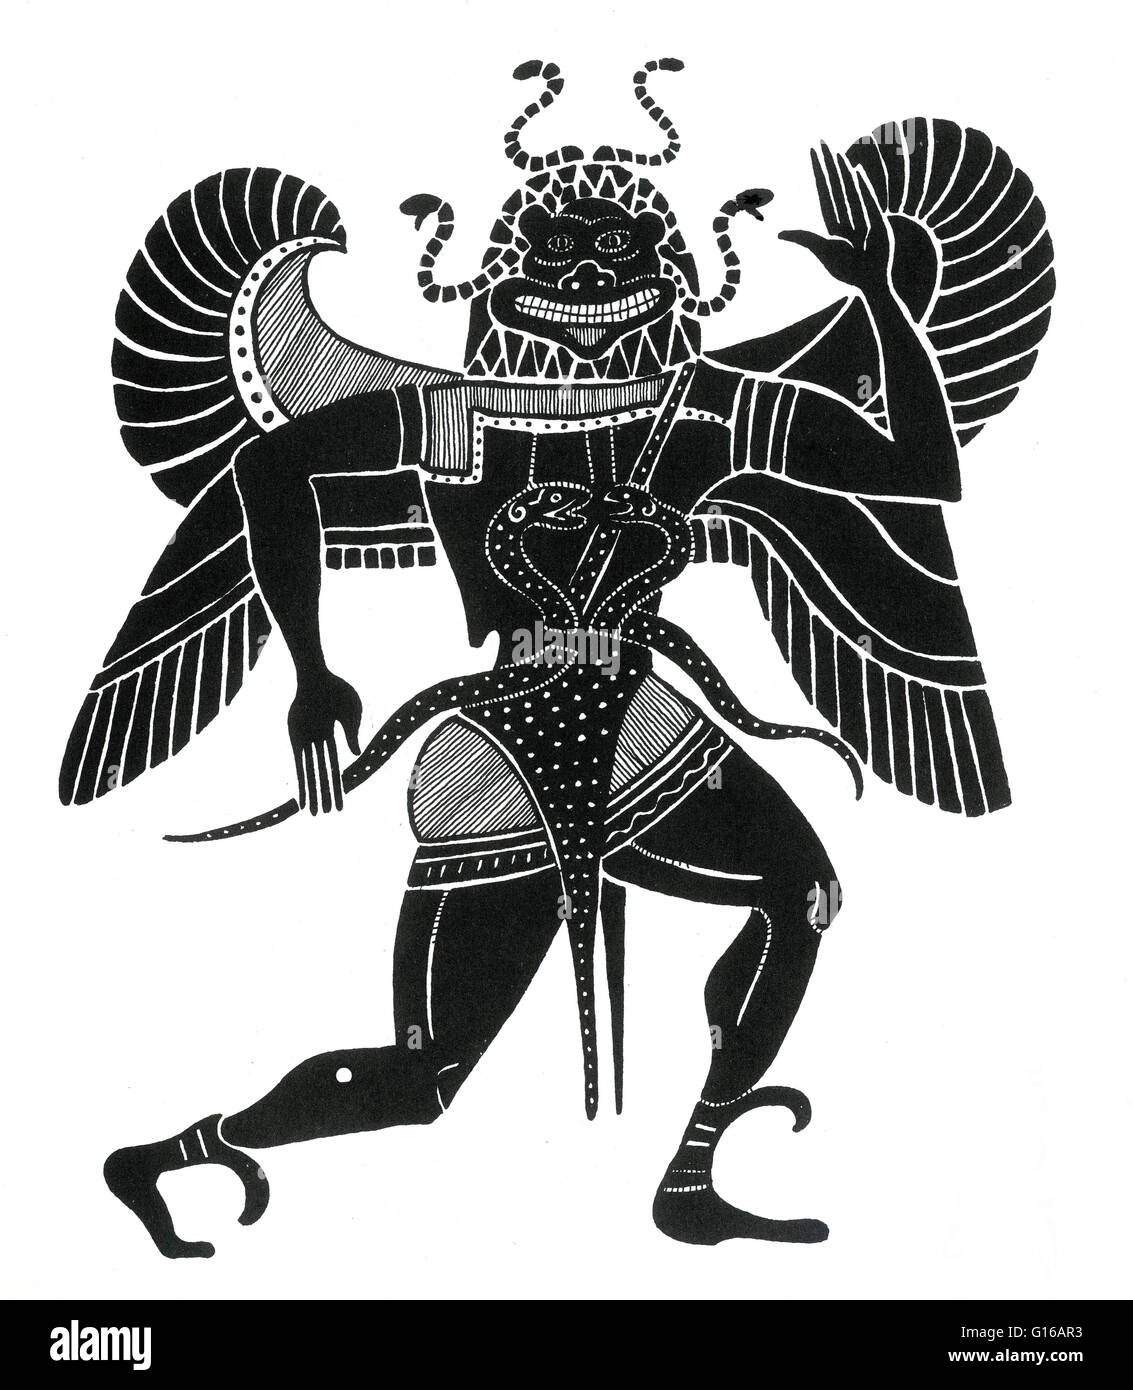 Gorgons  Greek mythology tattoos, Mythological creatures, Greek monsters